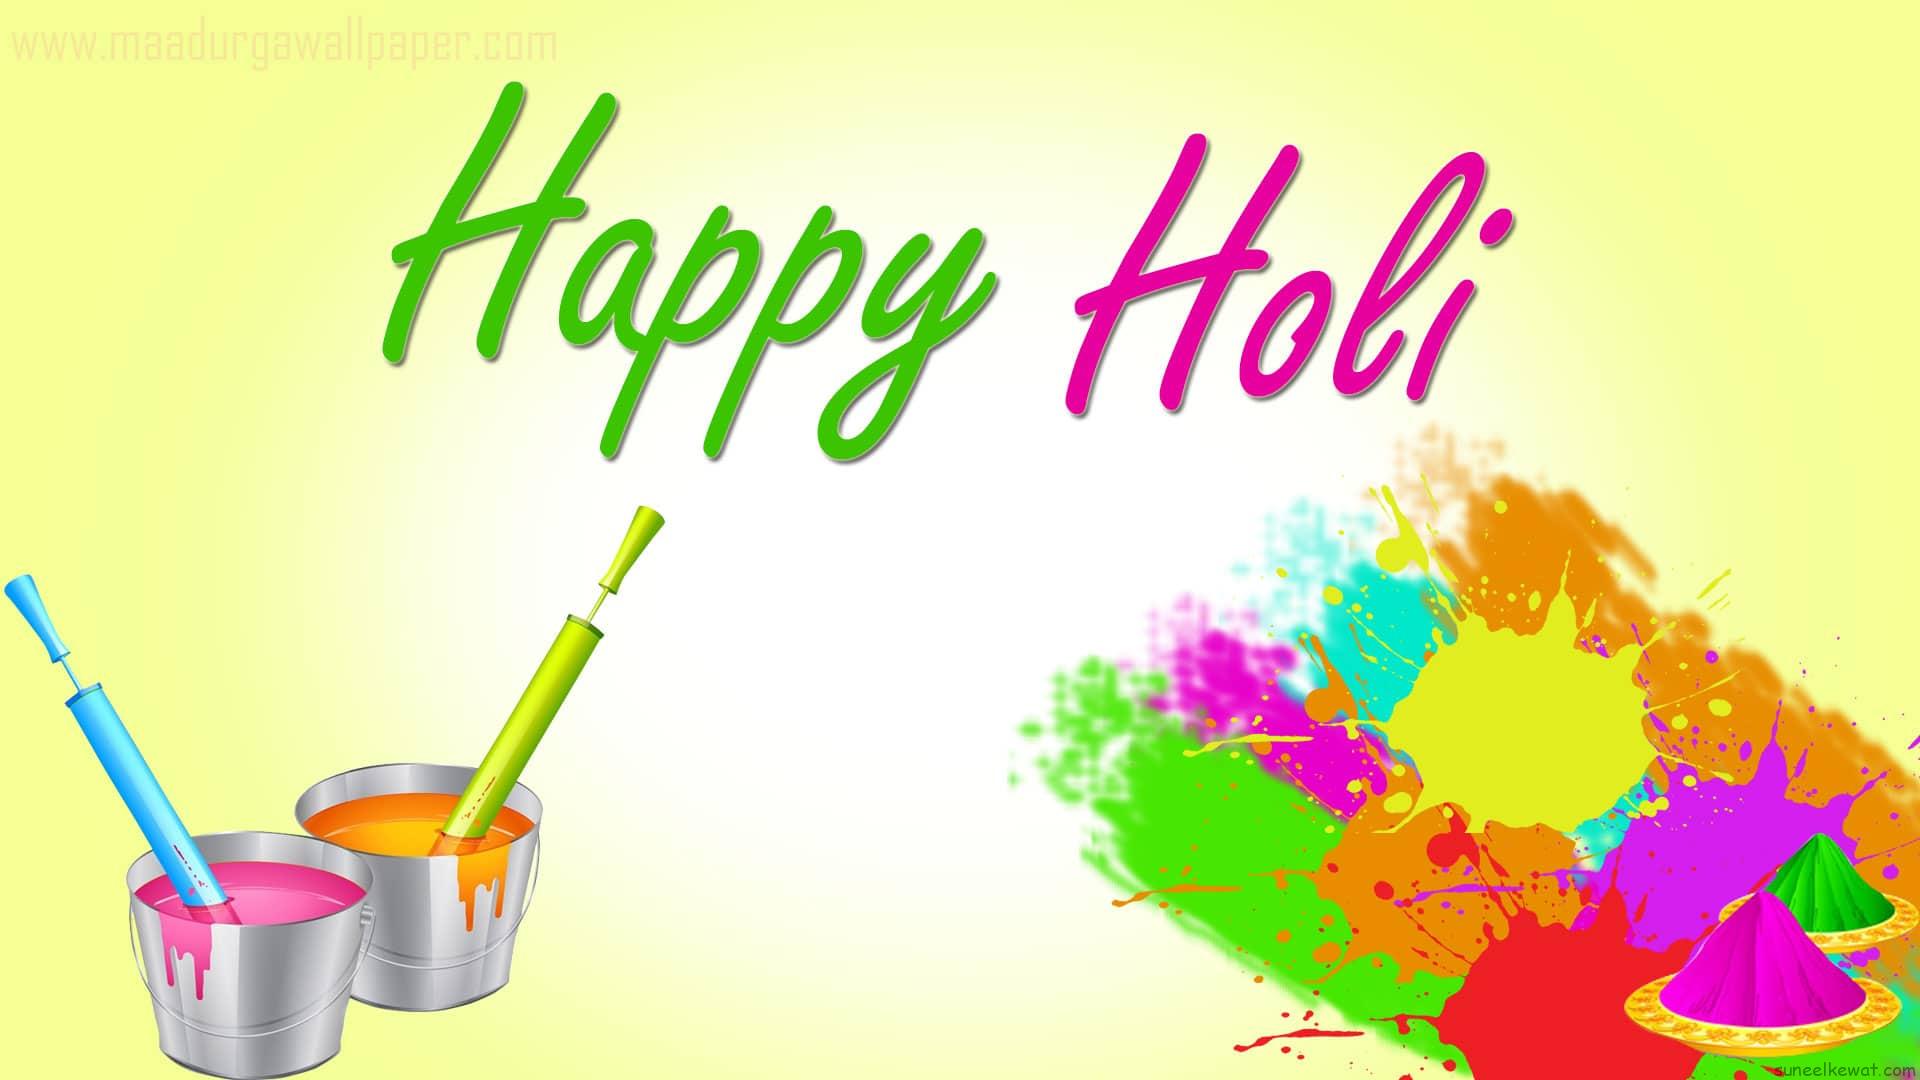 Happy Holi 2019. Holi Image Wallpaper HD Download. Holi Image